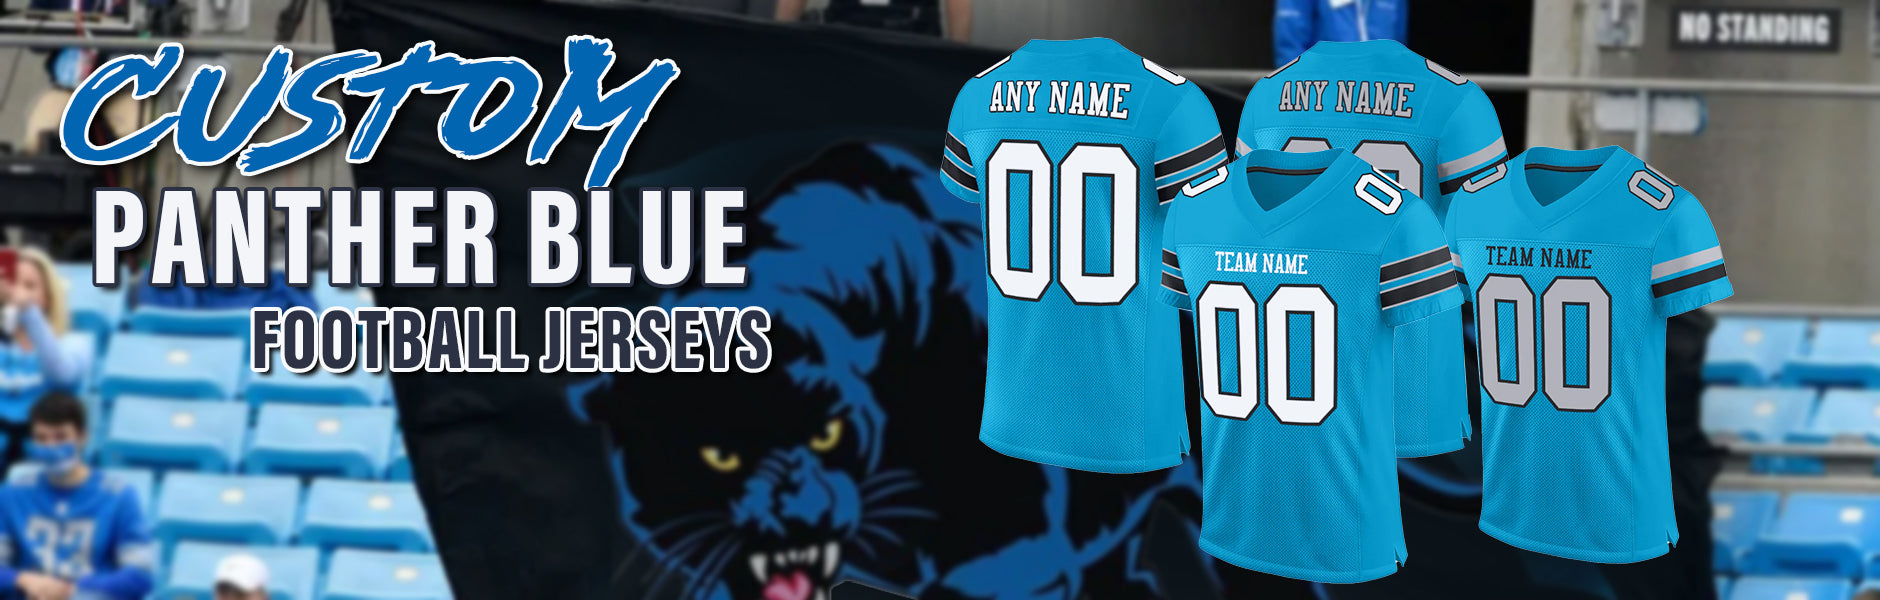 custom football panther blue jersey